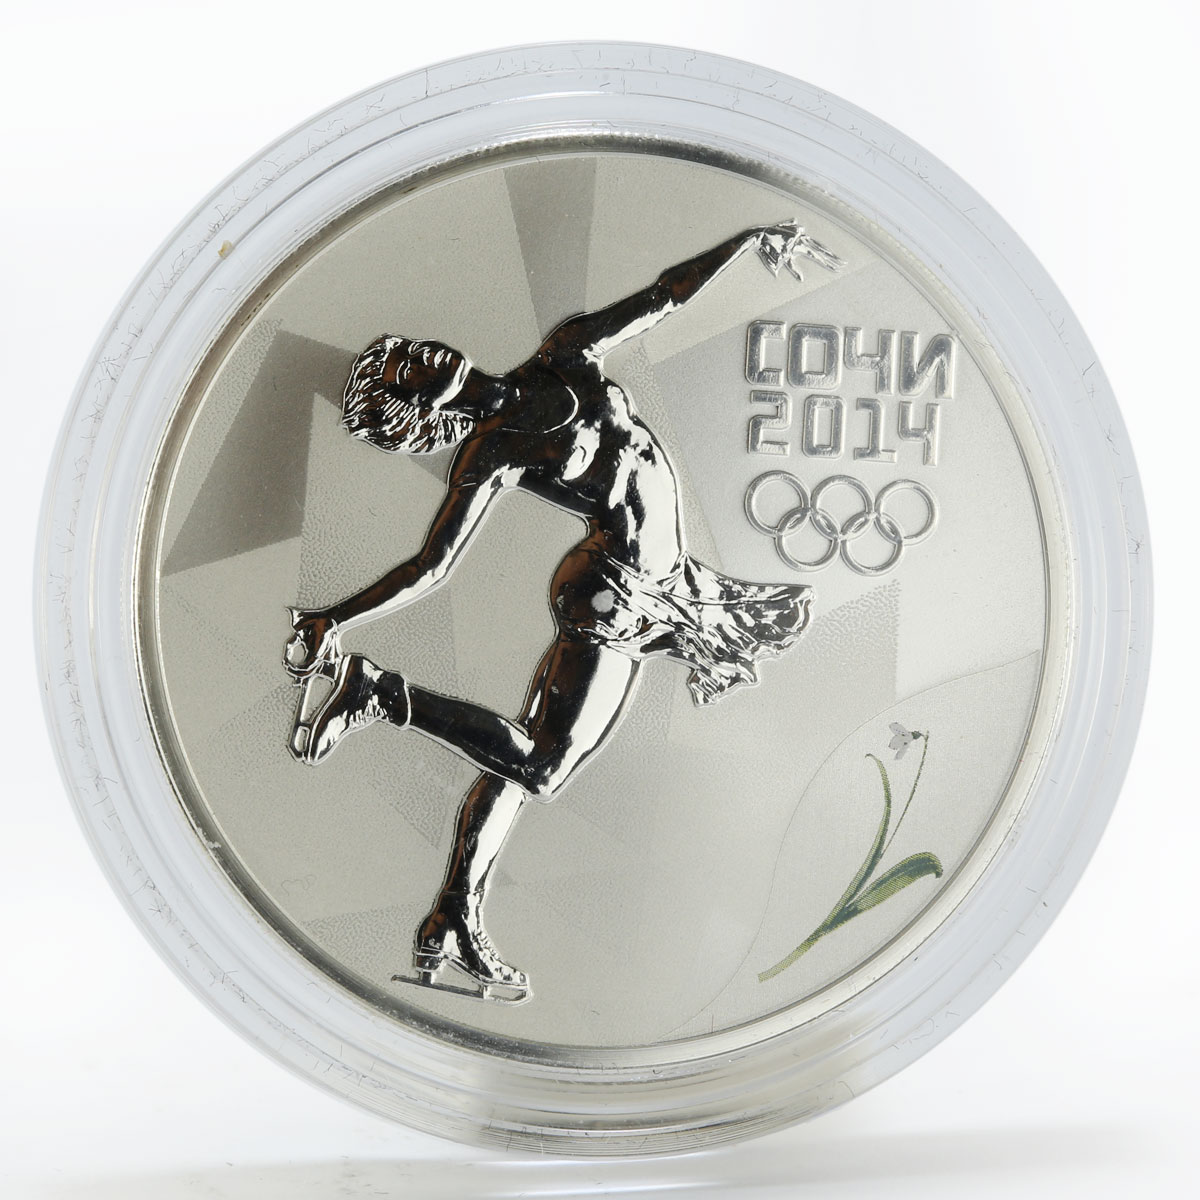 Russia 3 rubles Winter Olympics Sochi - Figure skating silver coin 2014